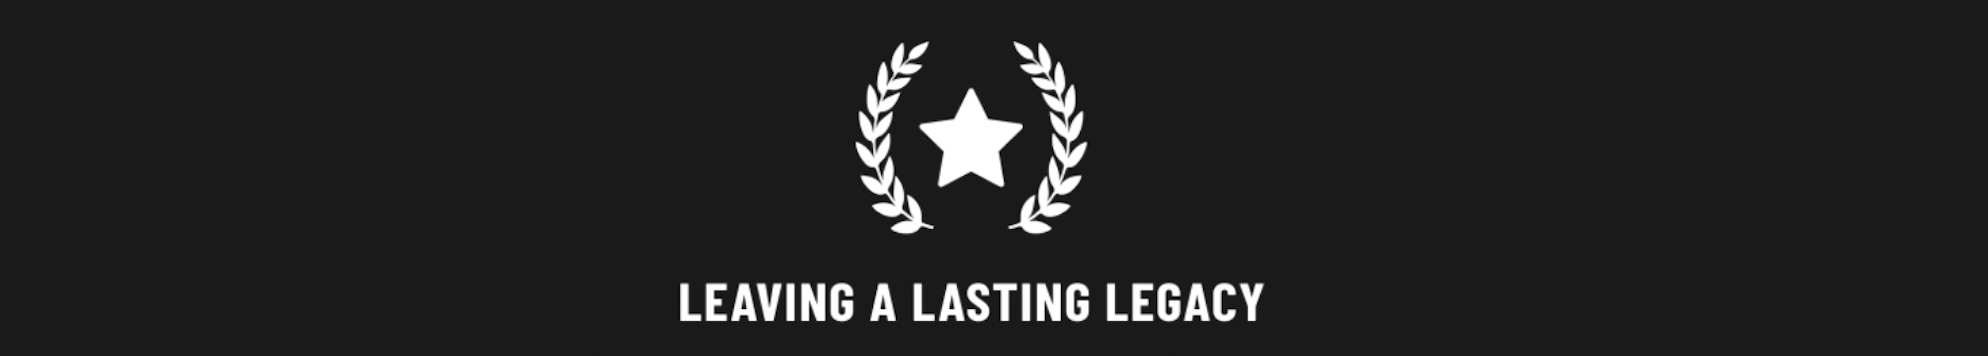 Leaving a lasting legacy